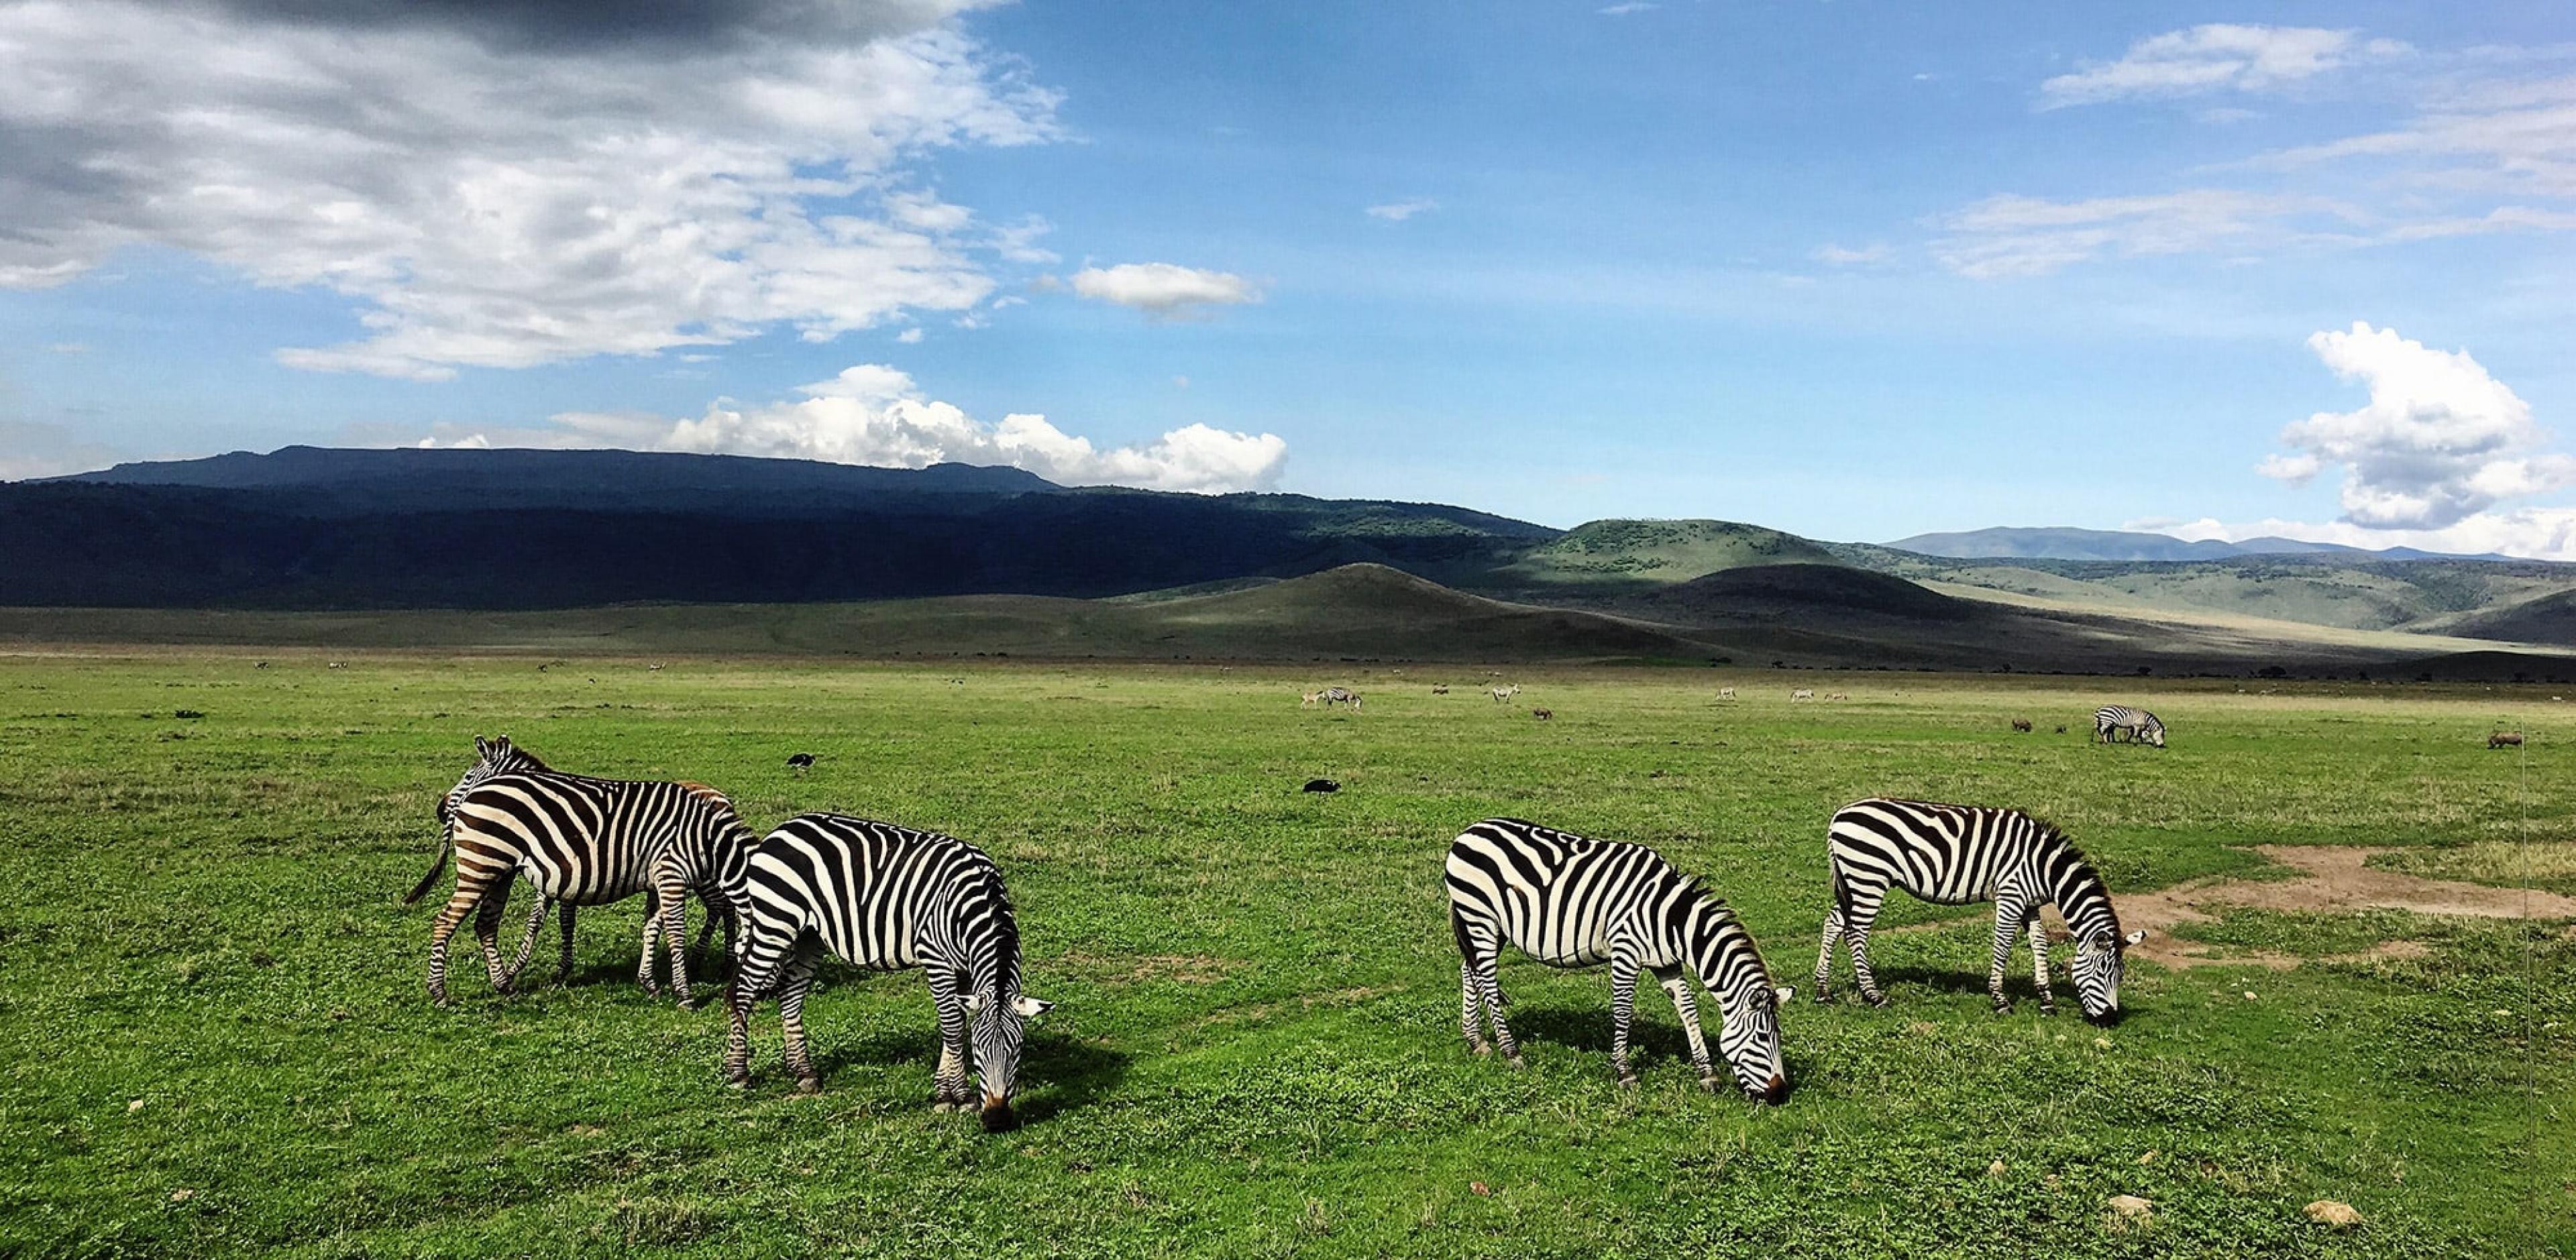 Zebras on a green plain